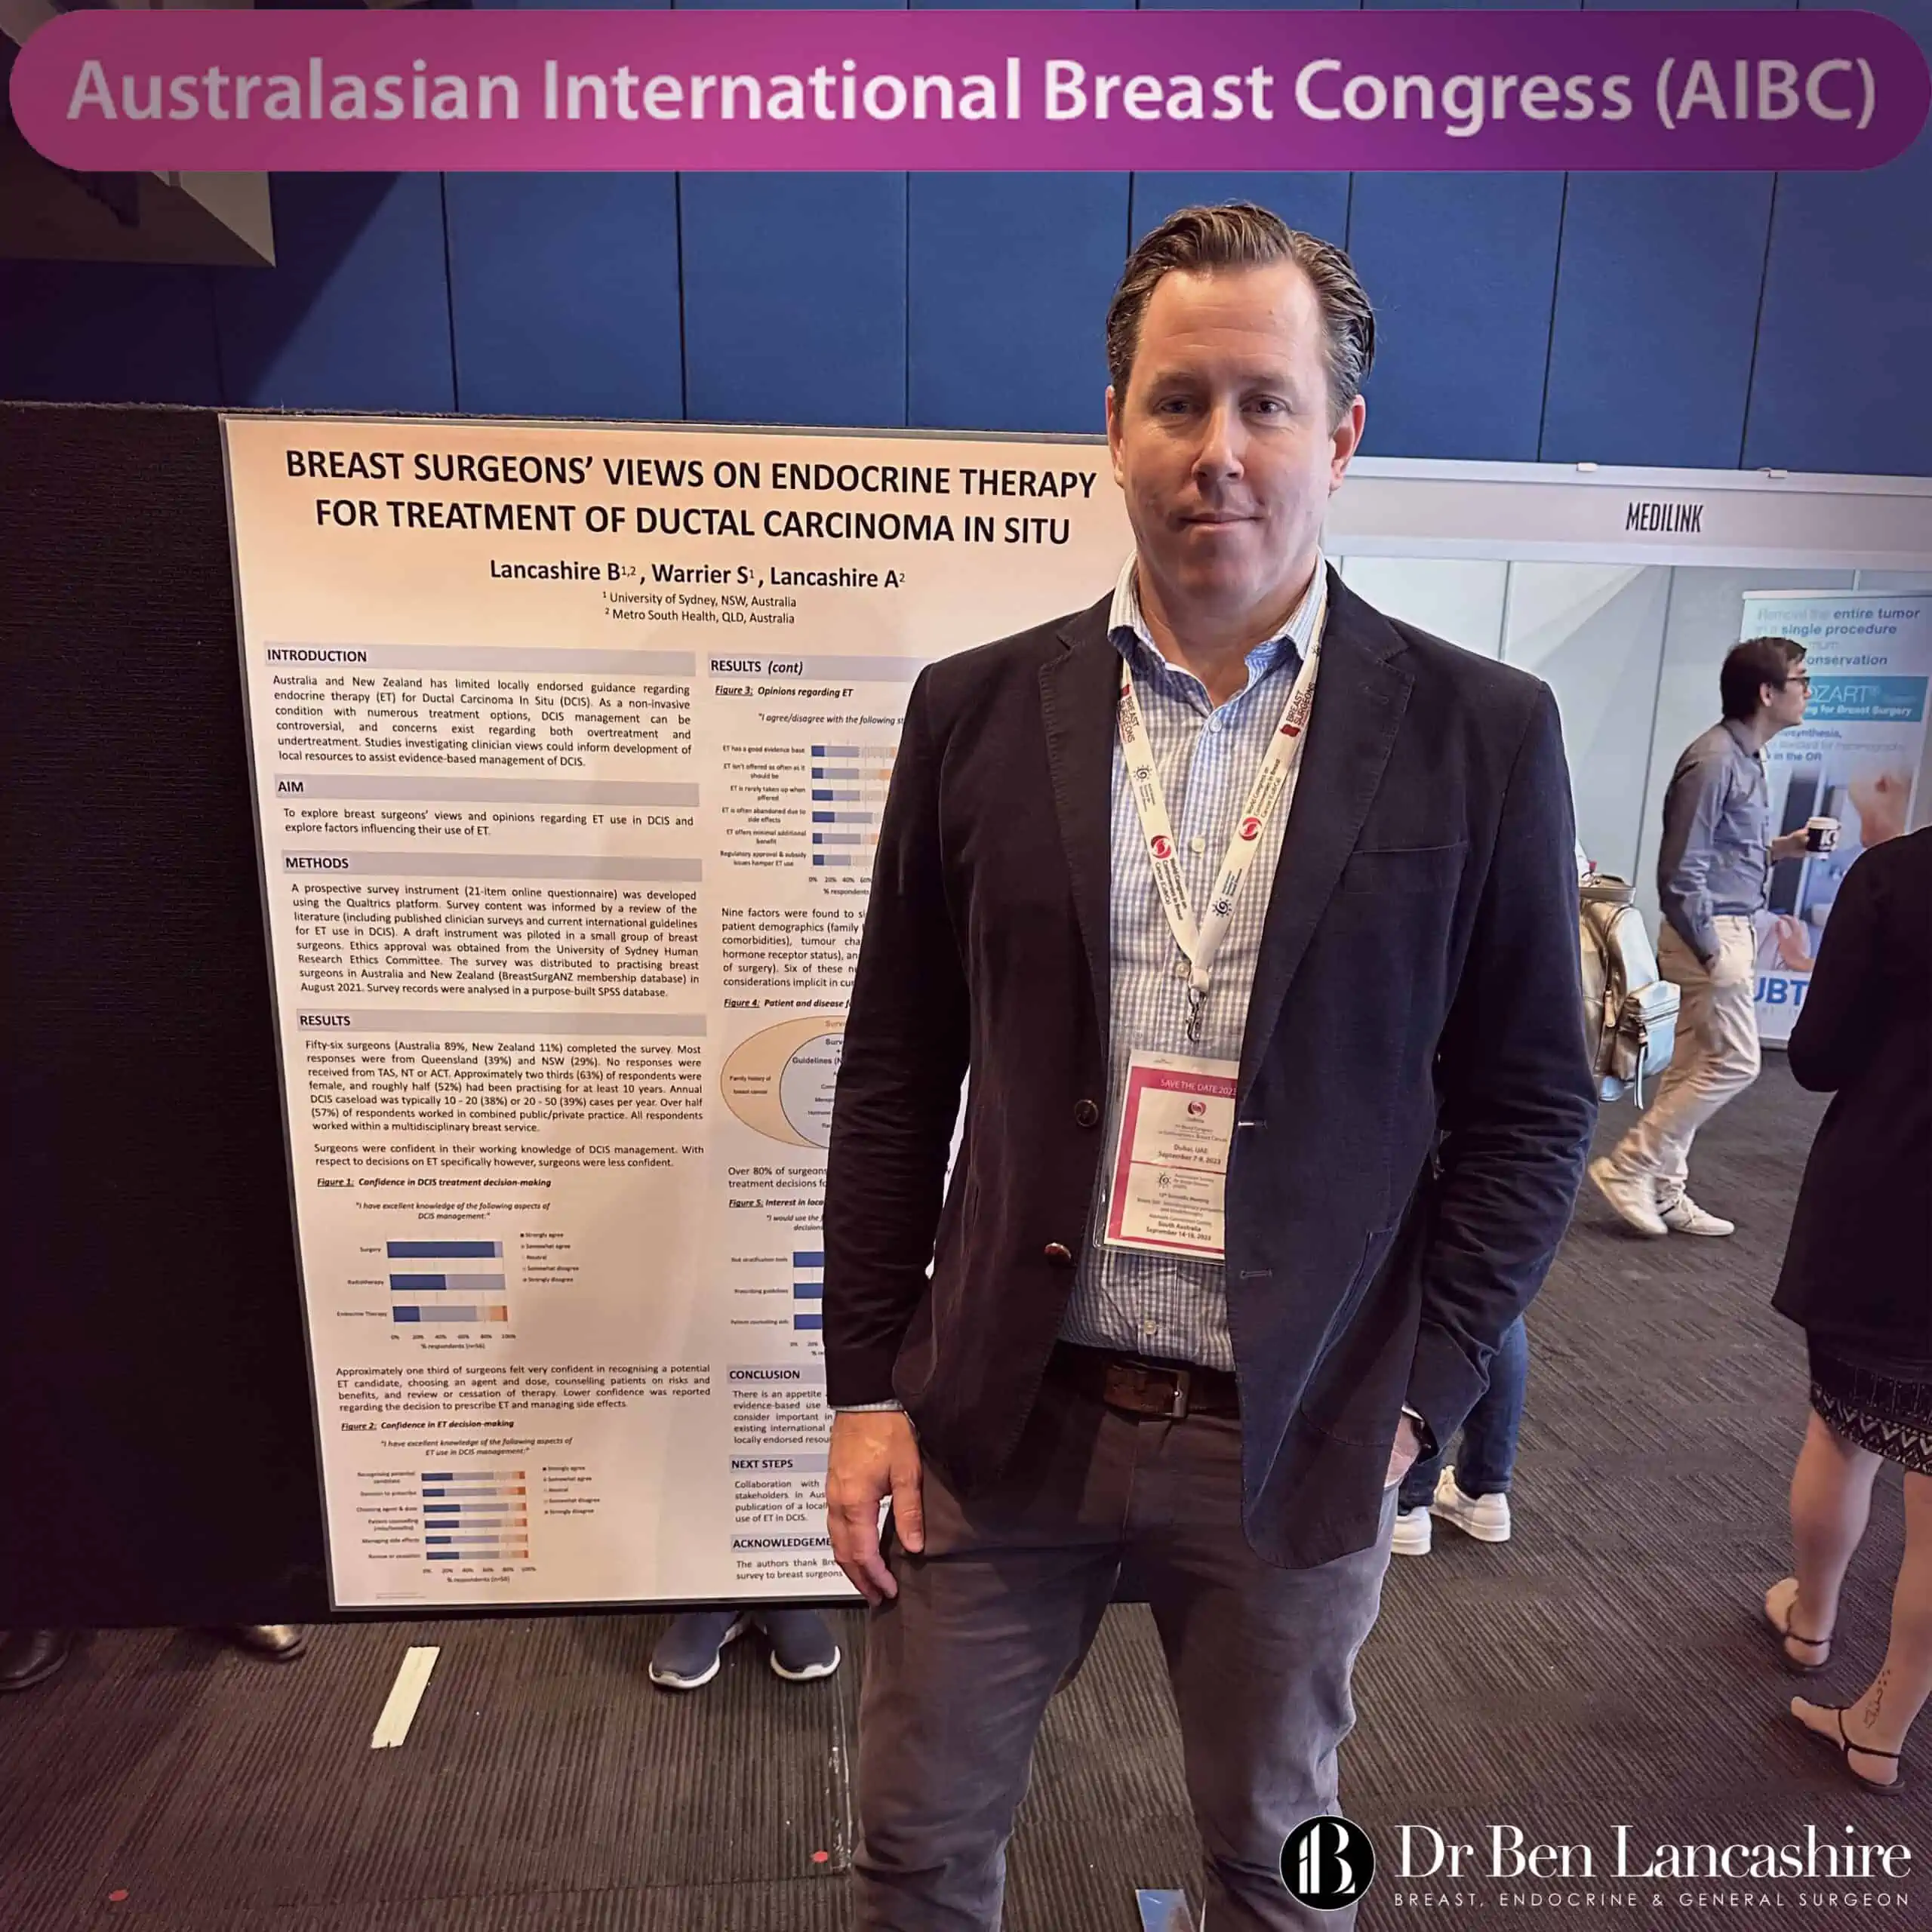 Dr Ben Lancashire at the Australian International Breast Congress